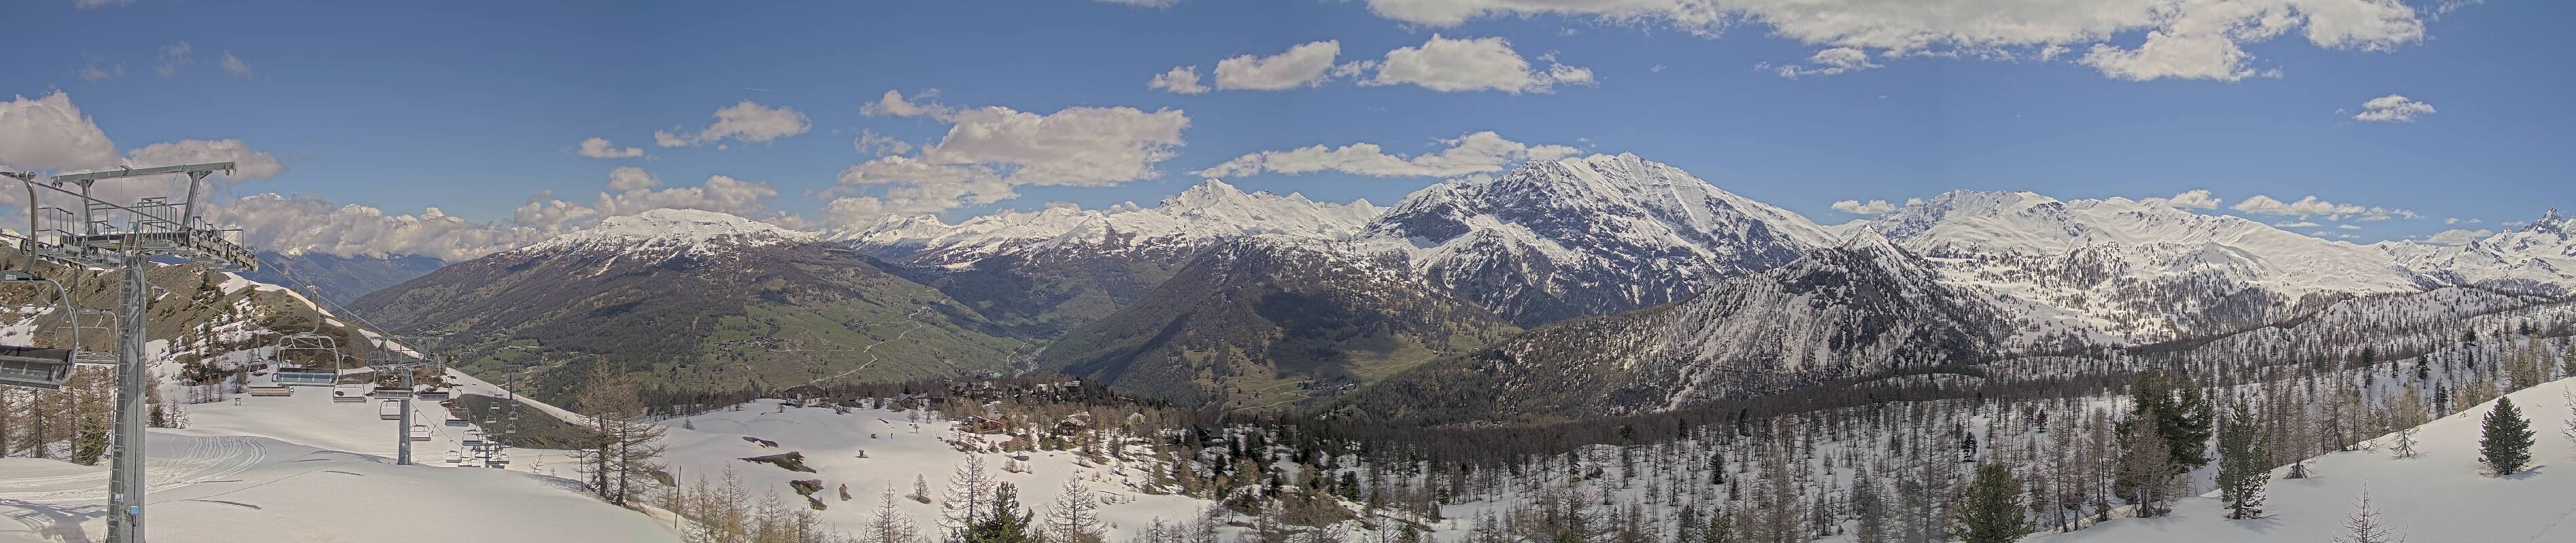 Via Lattea - Claviere webcam - Colle Berchia ski station